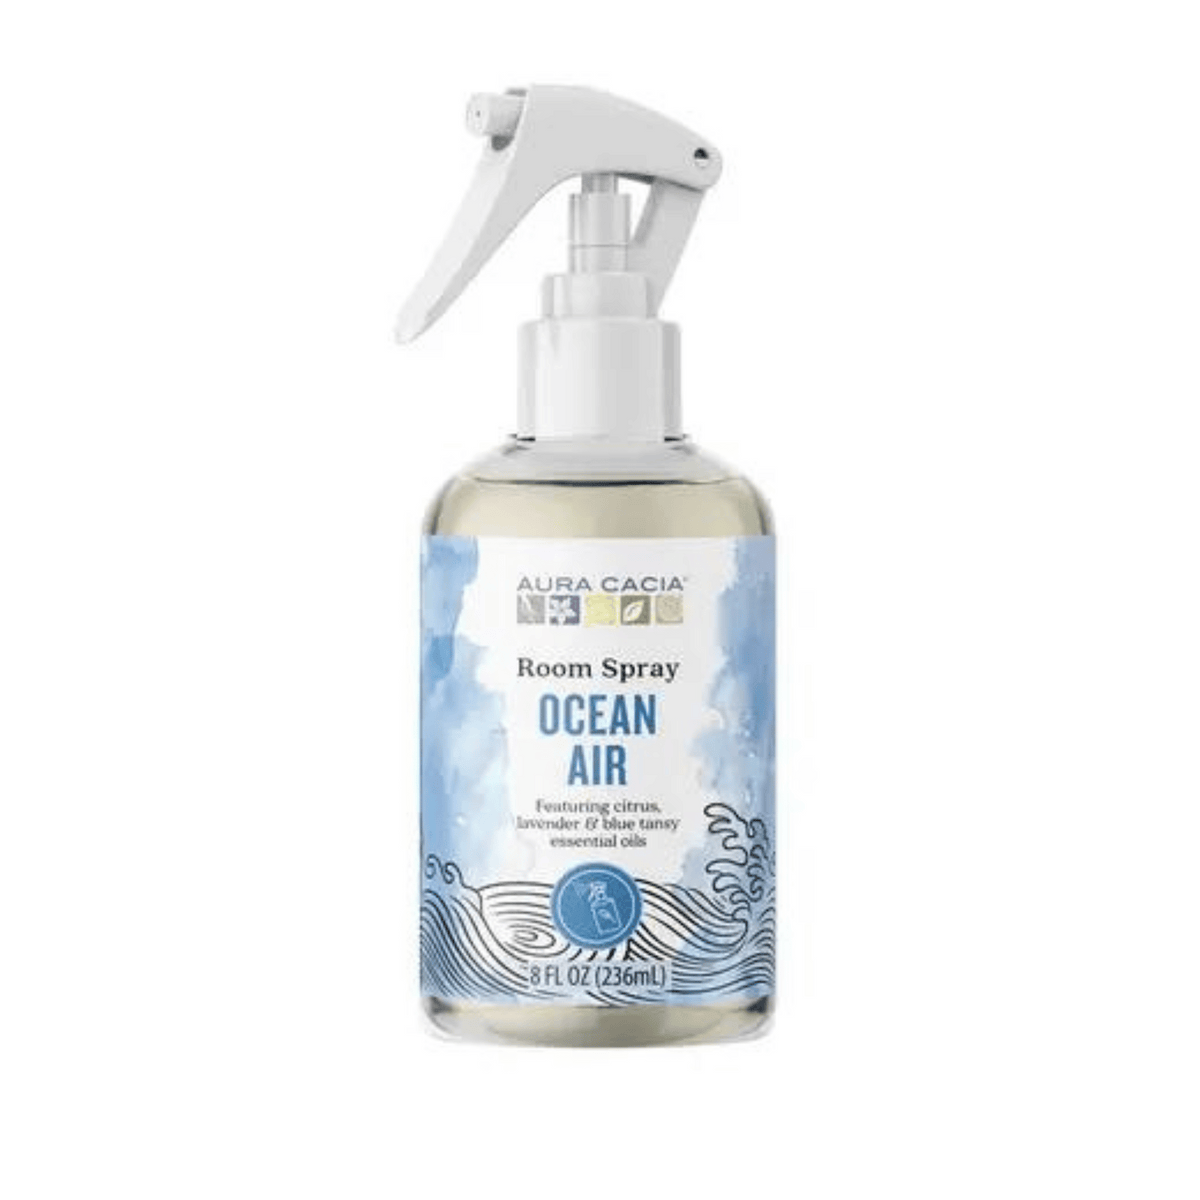 Primary Image of Room Spray - Ocean Air